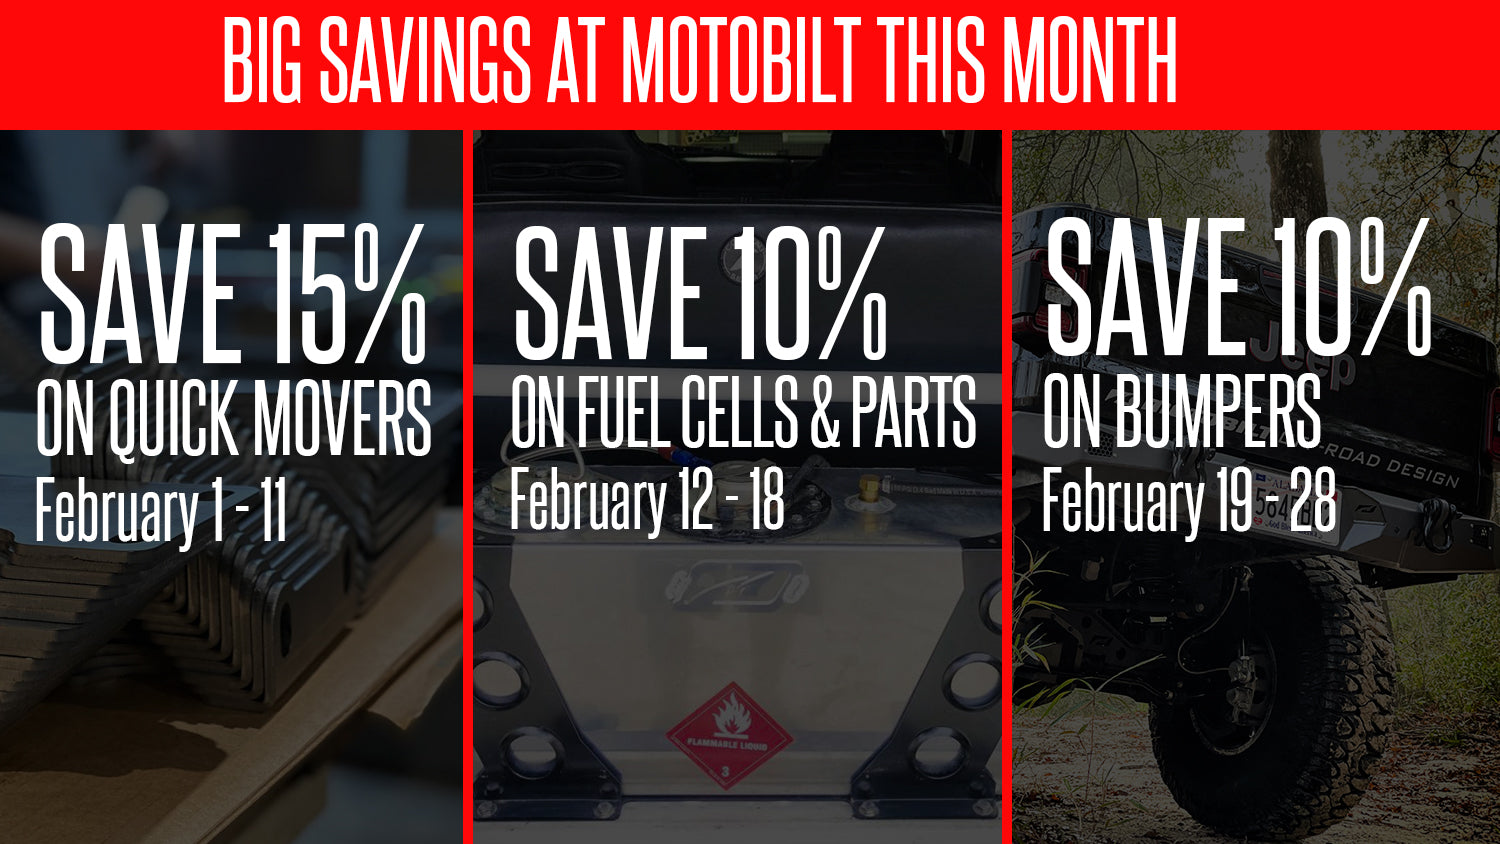 An entire MONTH of savings at Motobilt!